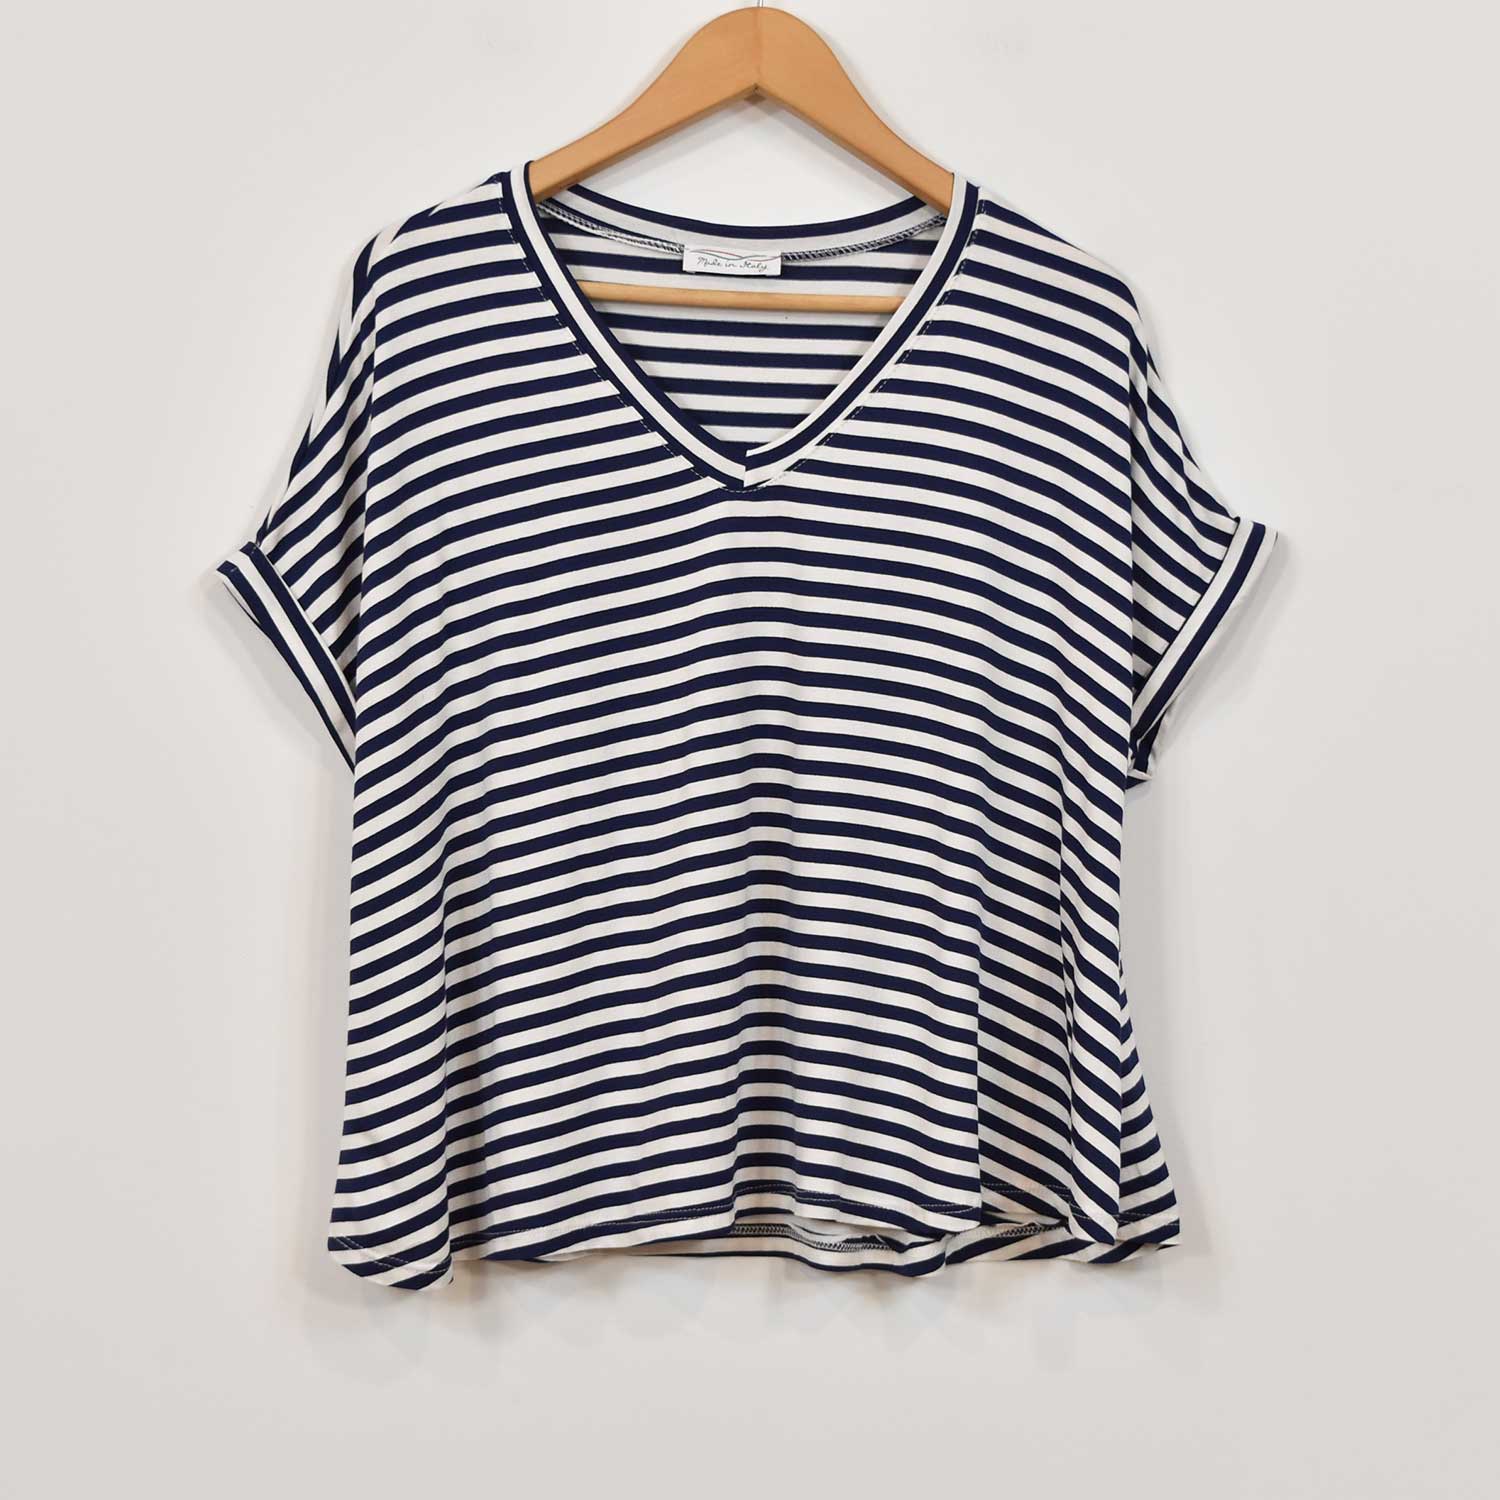 Blue striped oversize peaks t-shirt